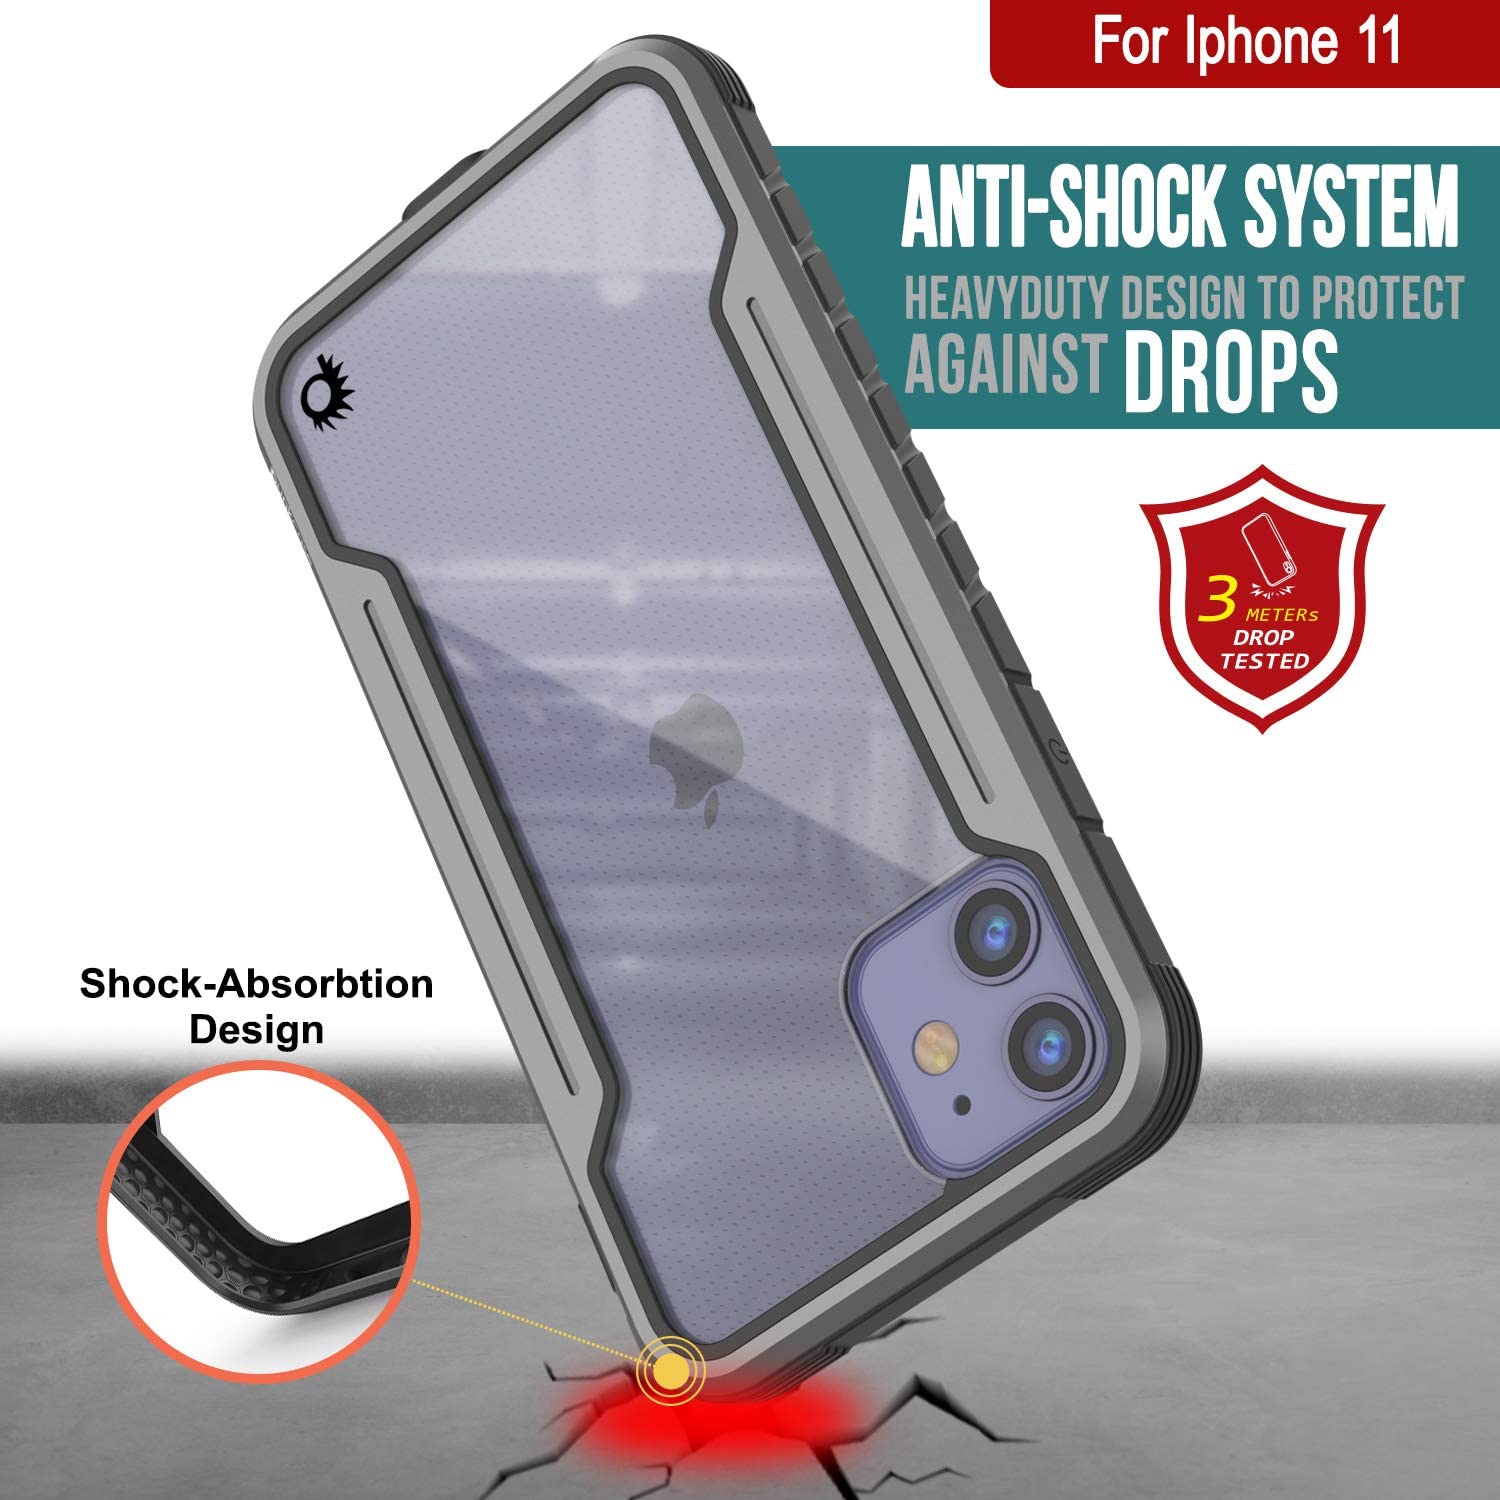 Punkcase iPhone 12 Mini ravenger Case Protective Military Grade Multilayer Cover [Grey-Black]